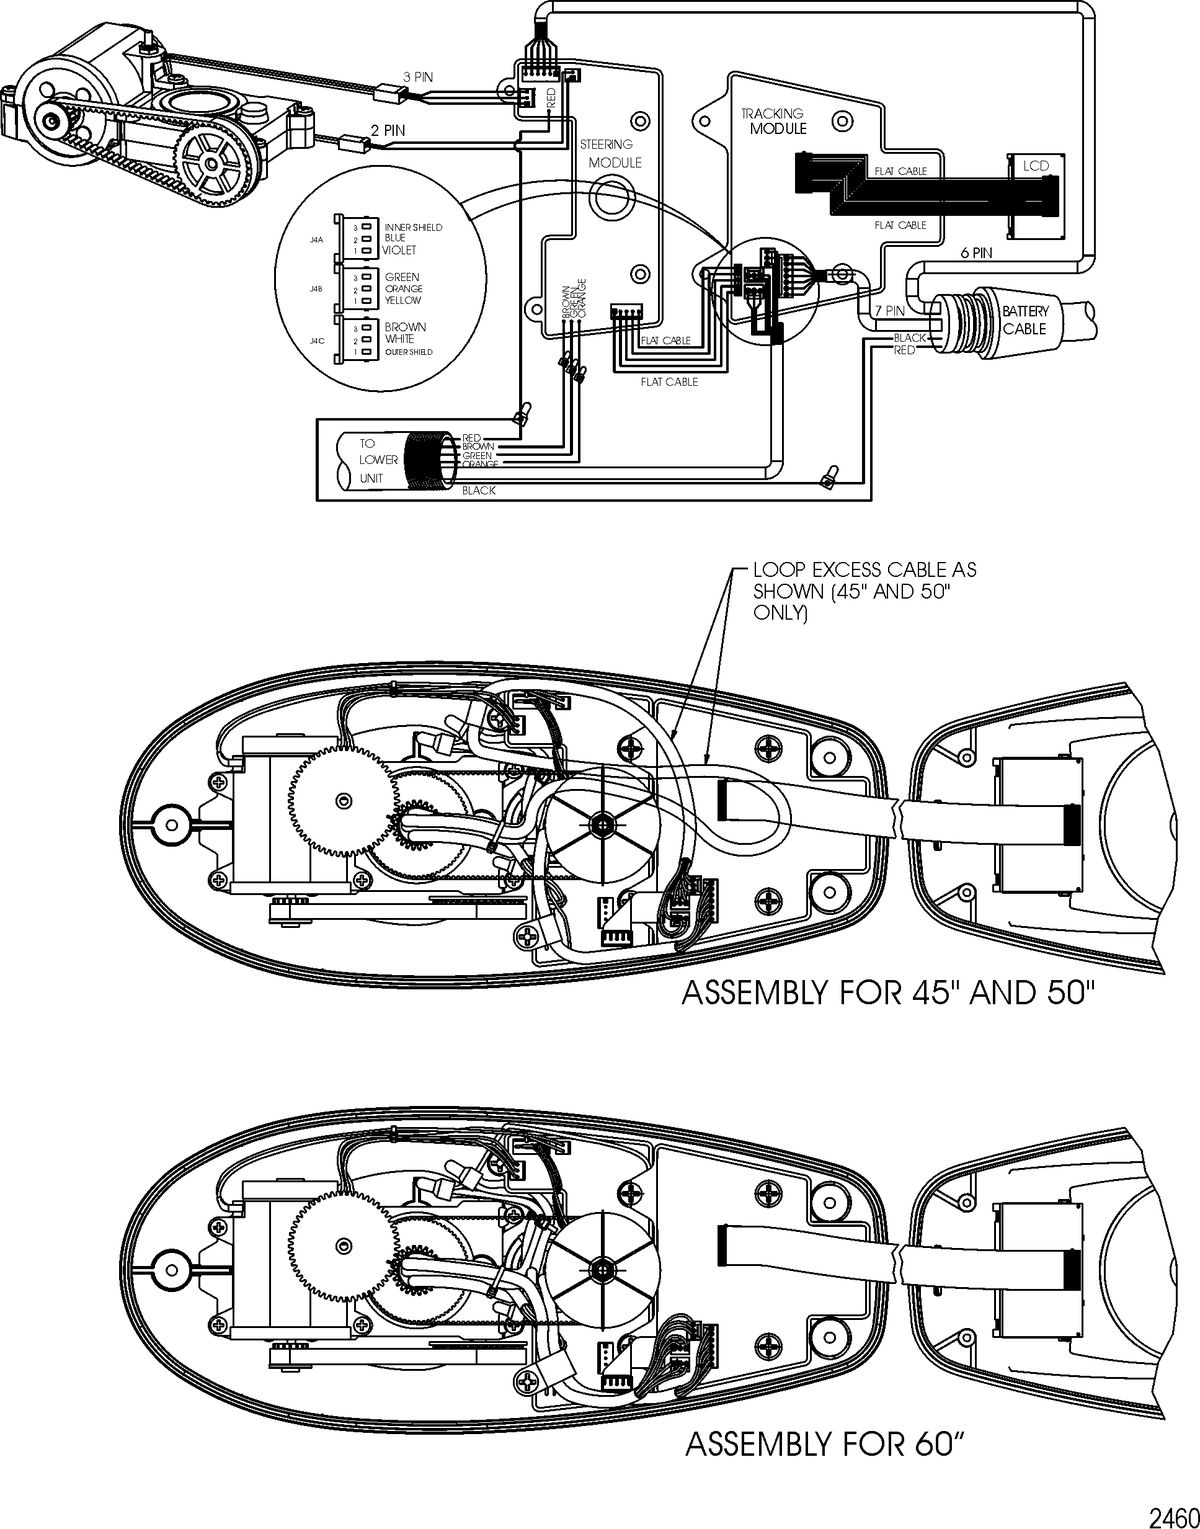 TROLLING MOTOR MOTORGUIDE PTSV SERIES Wire Diagram(Model PTSV82FBD) (24 Volt)